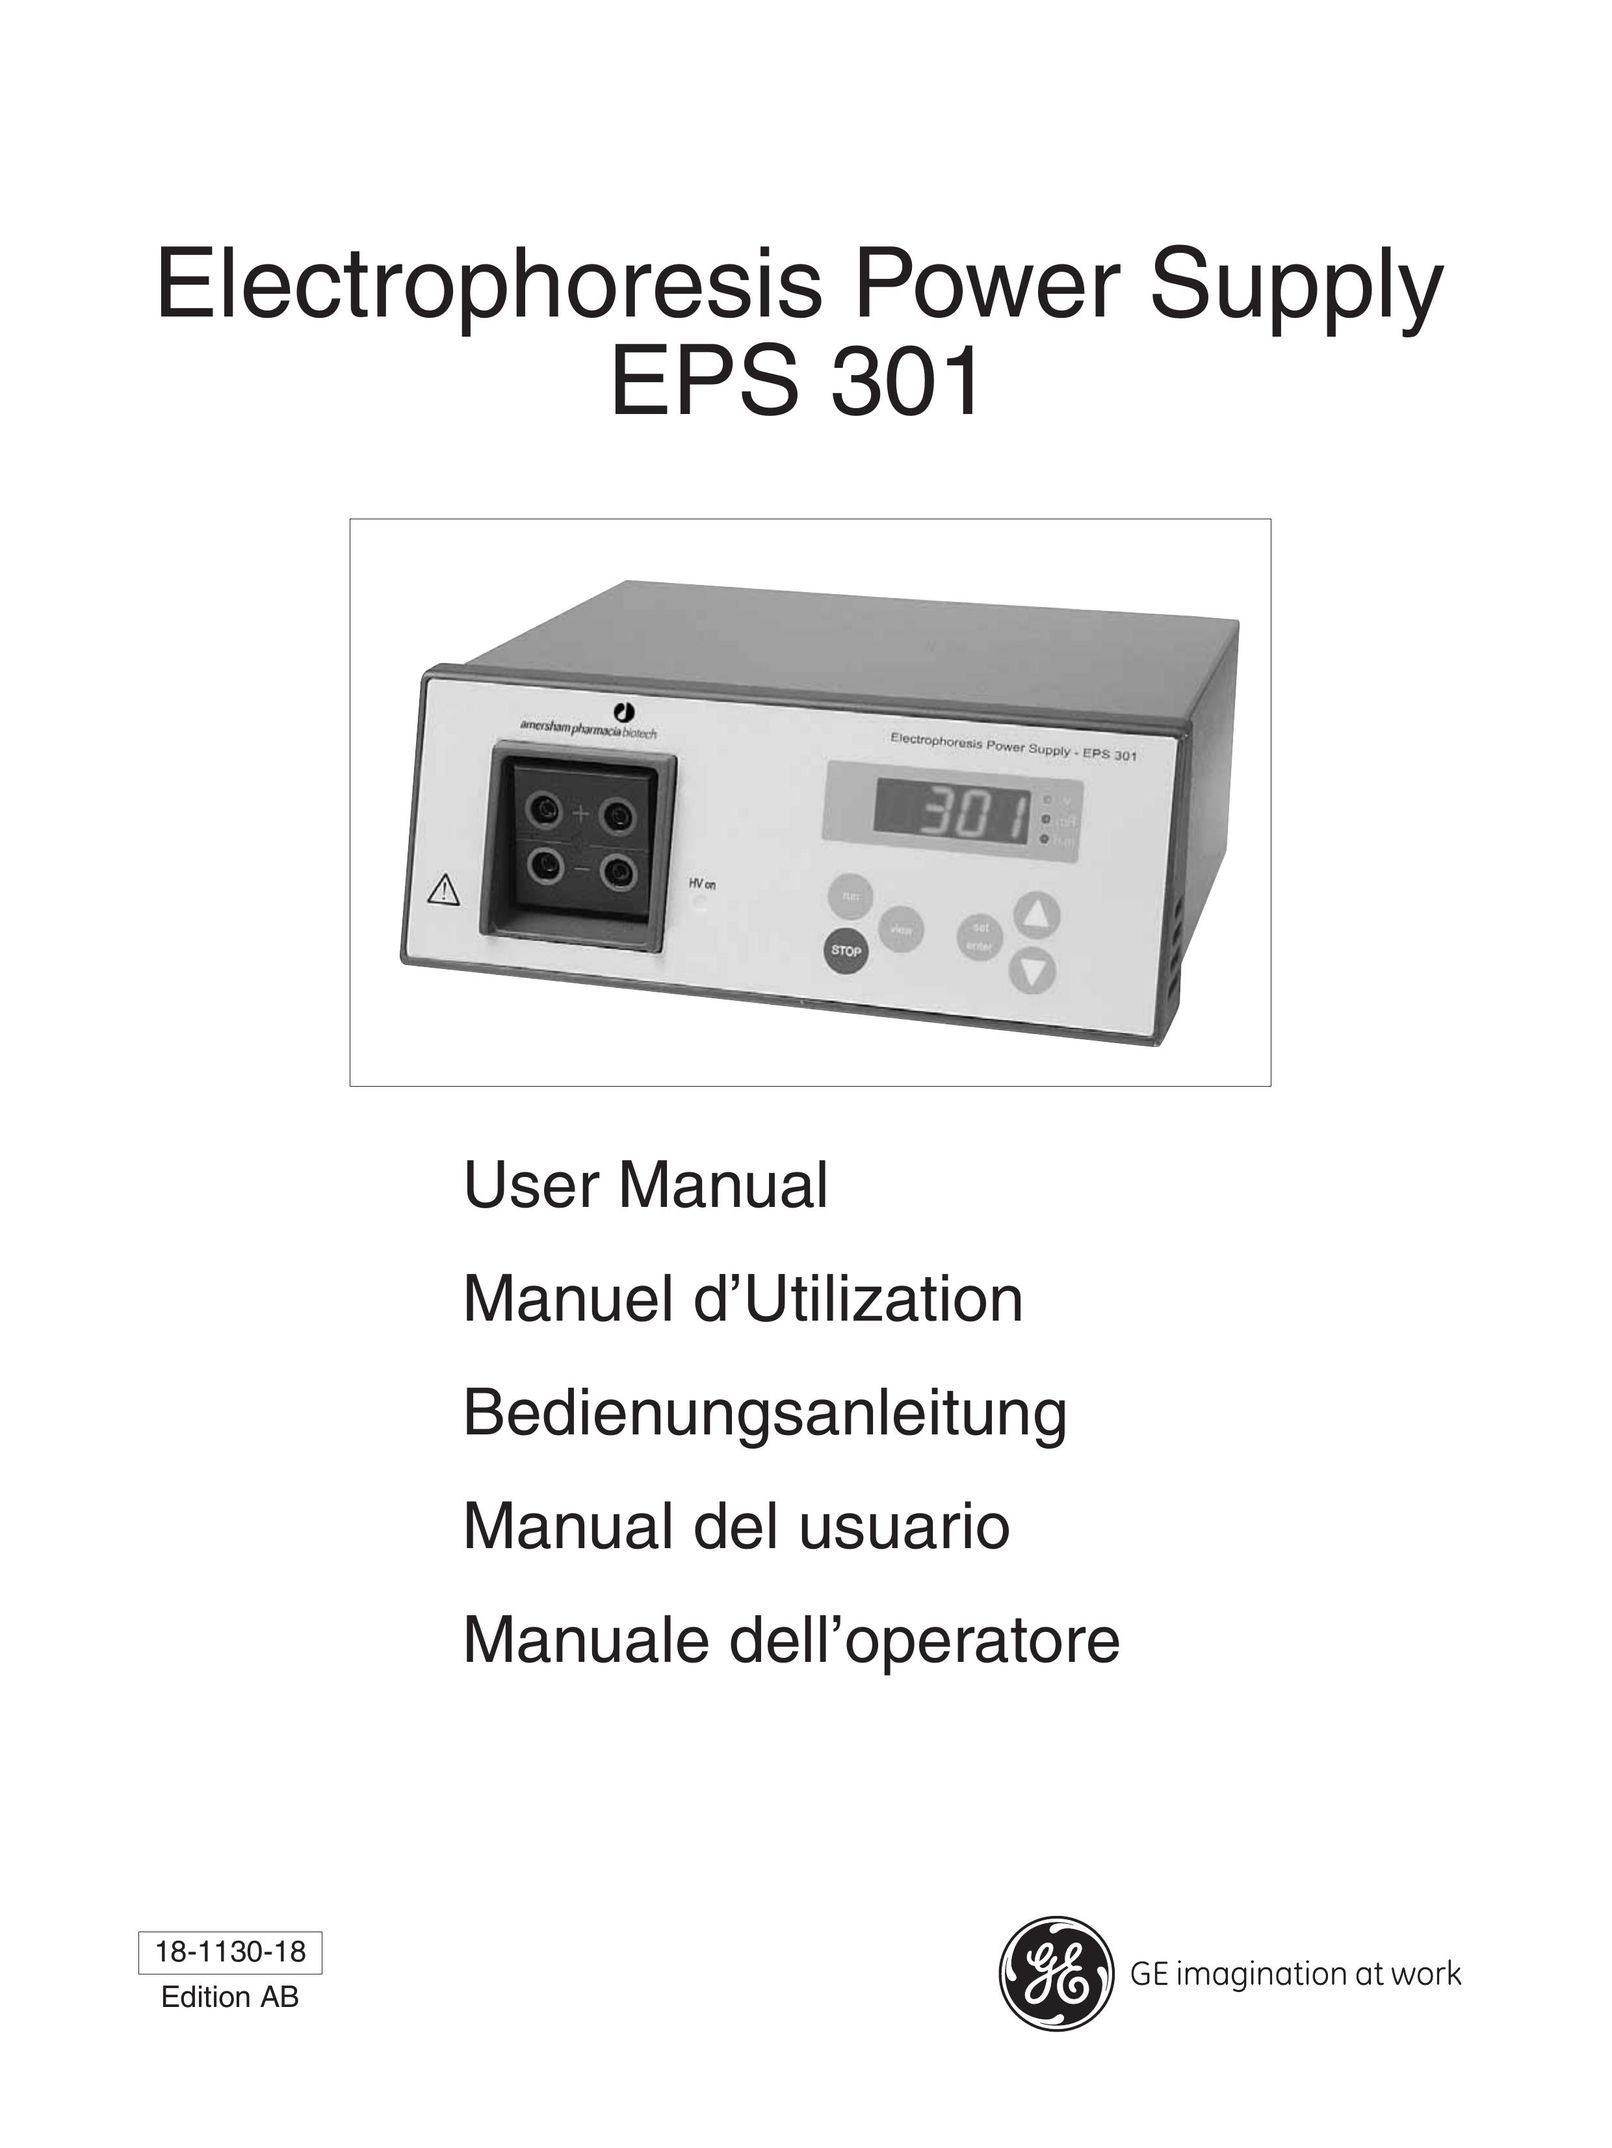 GE EPS 301 Power Supply User Manual